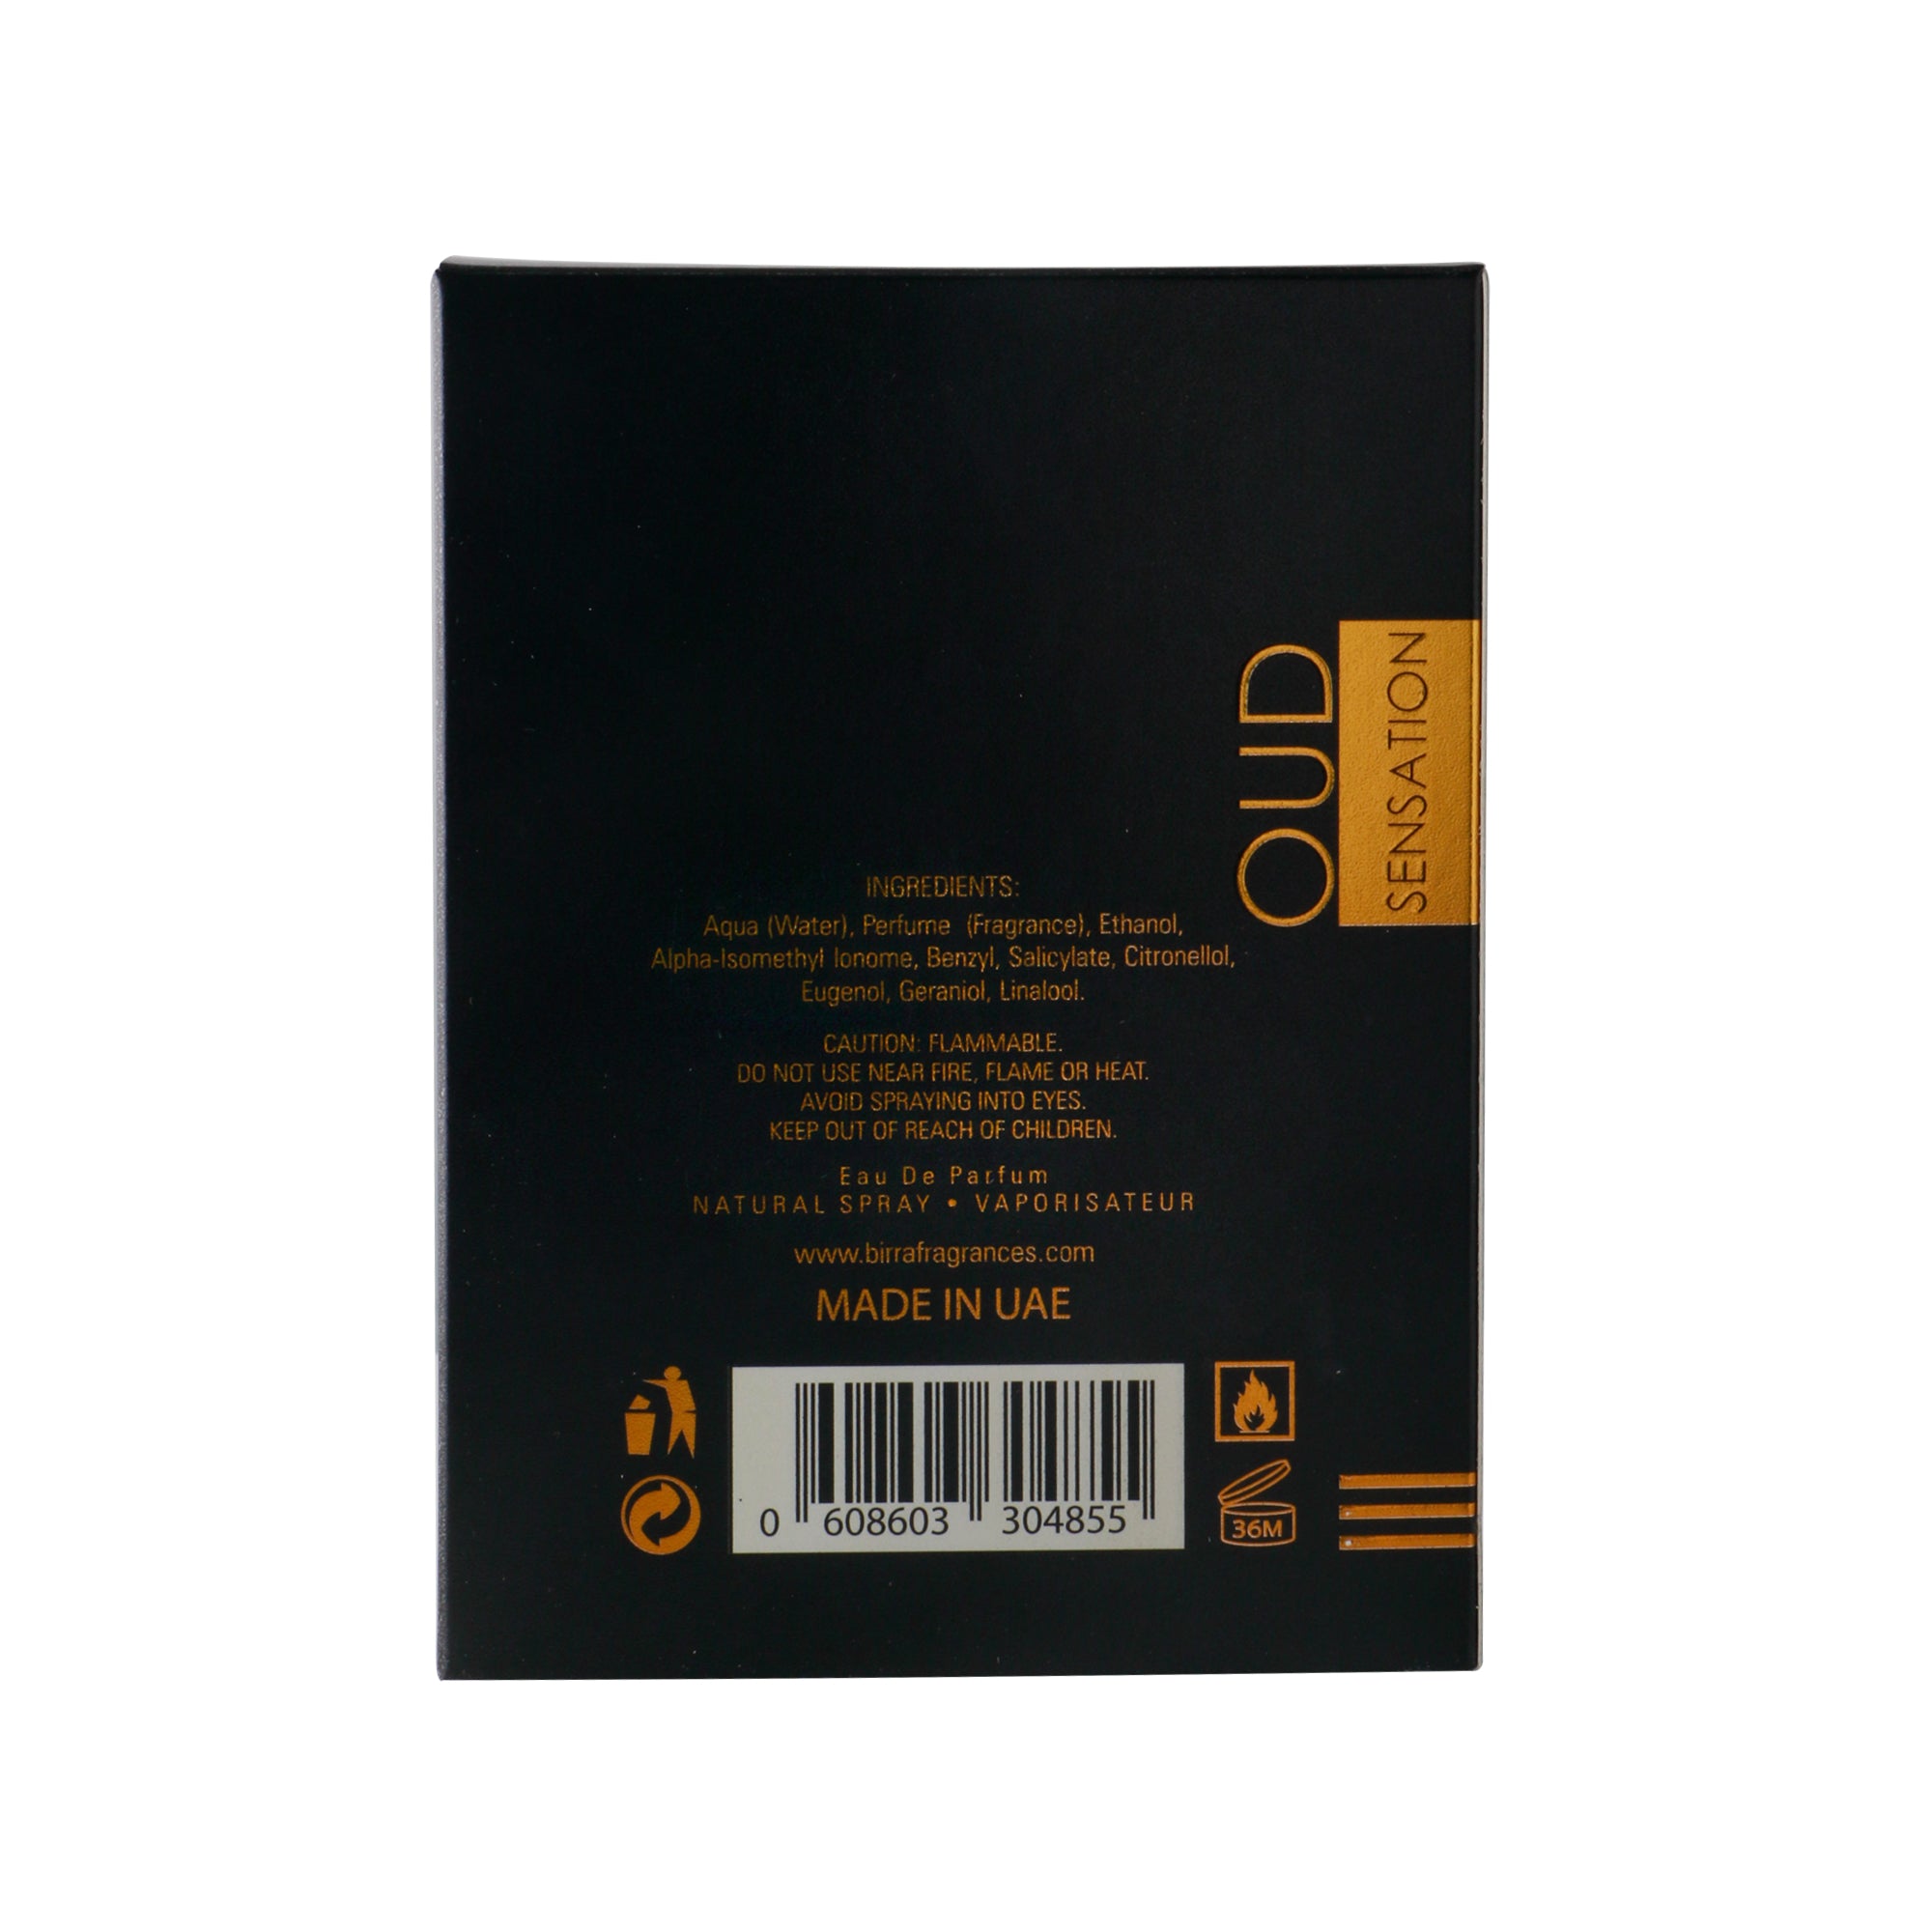 Oud Sensation EDP 50ml- Premium Perfume